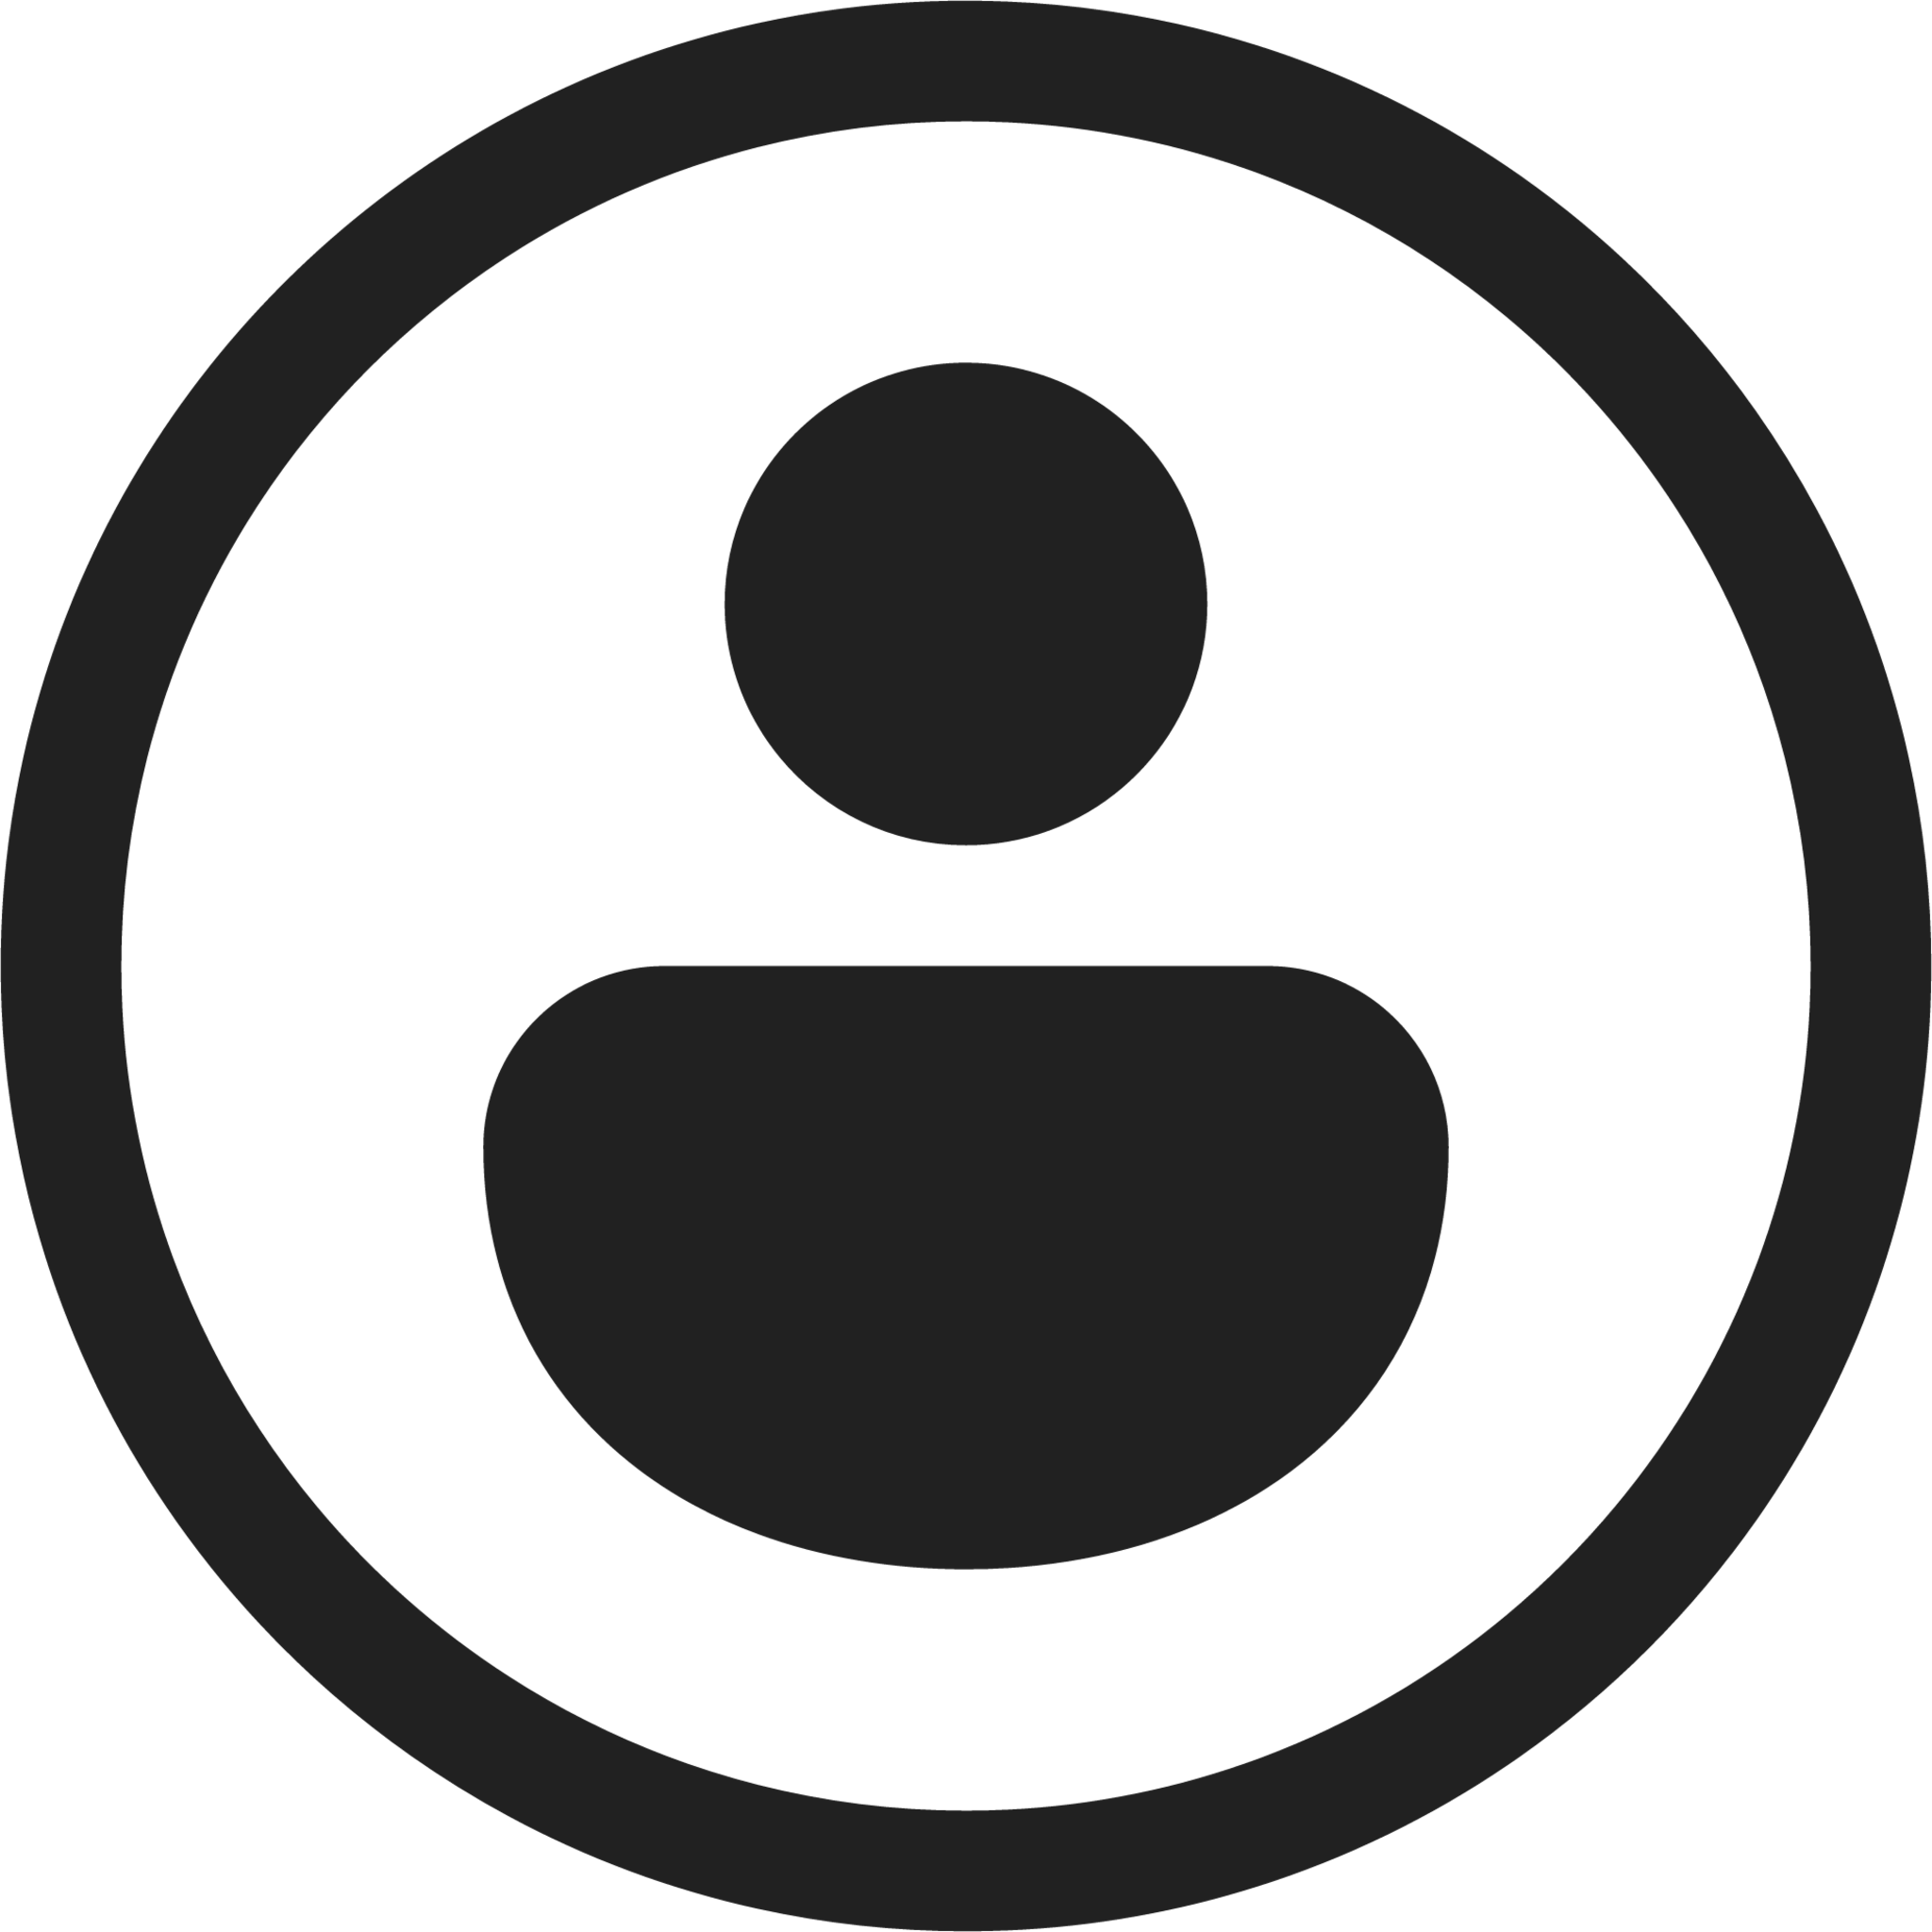 Person Circle icon